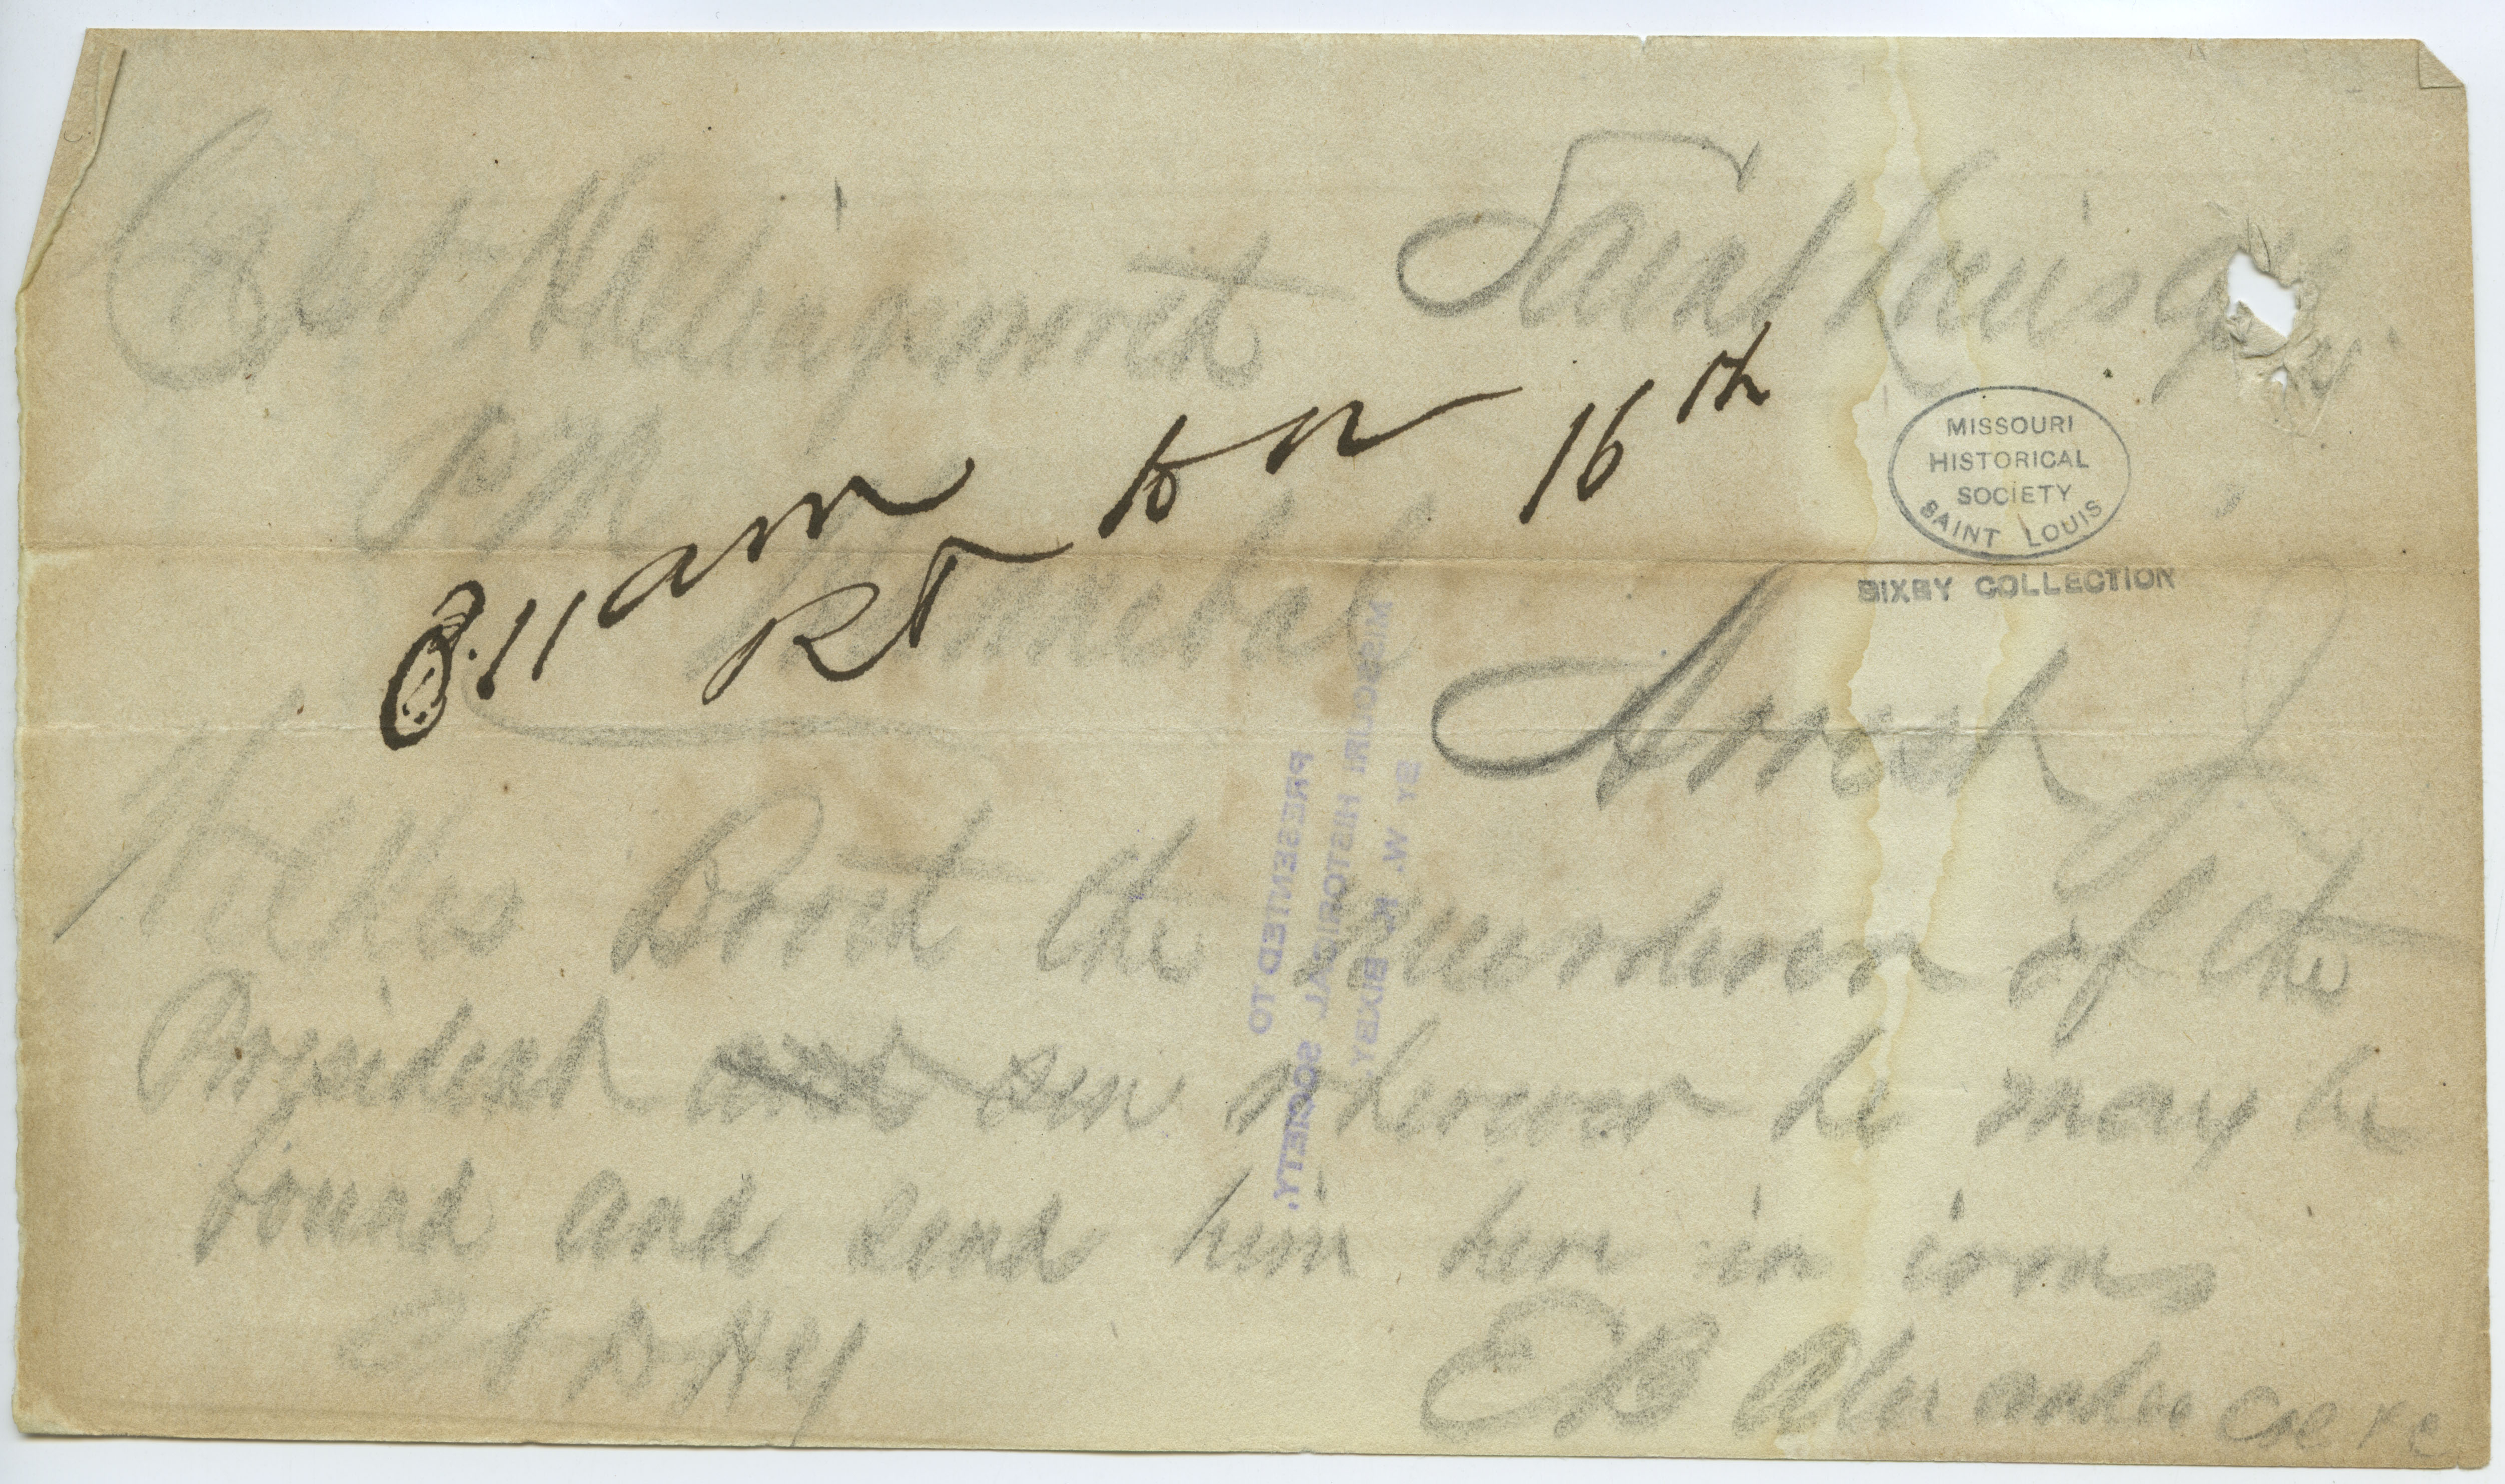 Contemporary copy of telegram of E. B. Alexander, Saint Louis, to Capt. Hollingsworth, Hannibal, [April 15, 1865]